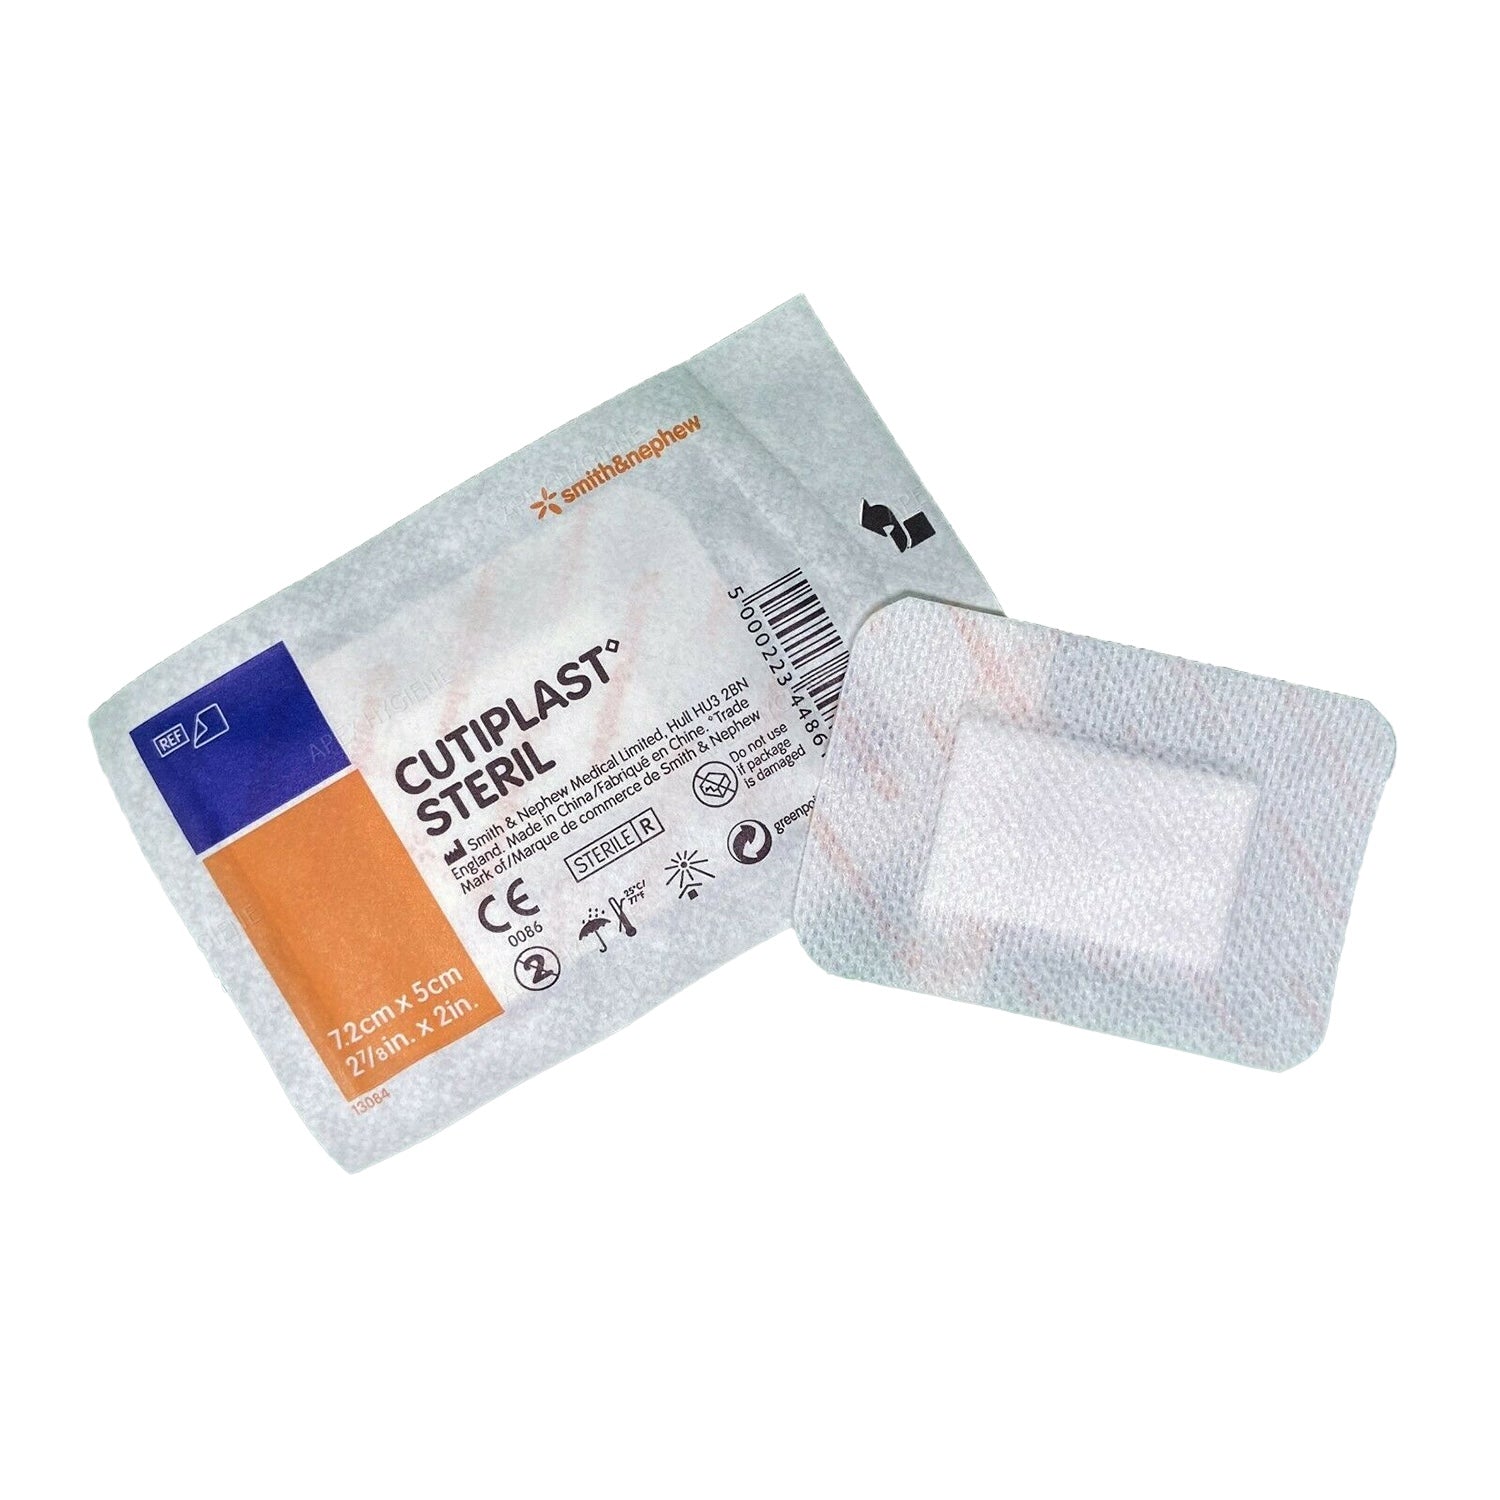 Cutiplast Absorbent Dressing | Sterile | 7.2 x 5cm | Pack of 100 (3)